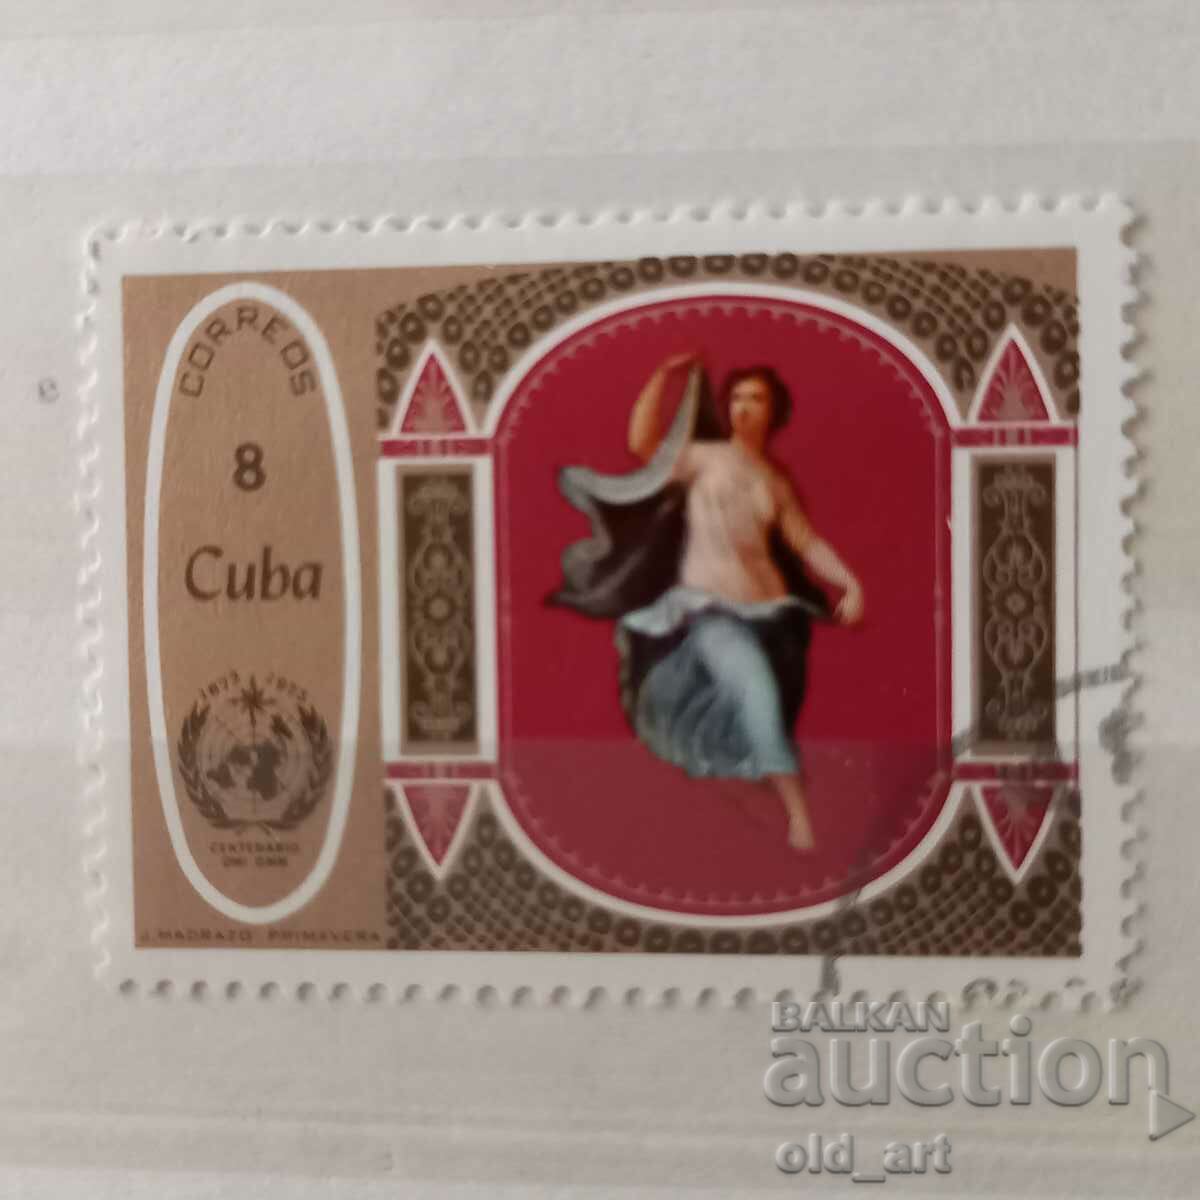 Postage stamp - Cuba, Meteorology